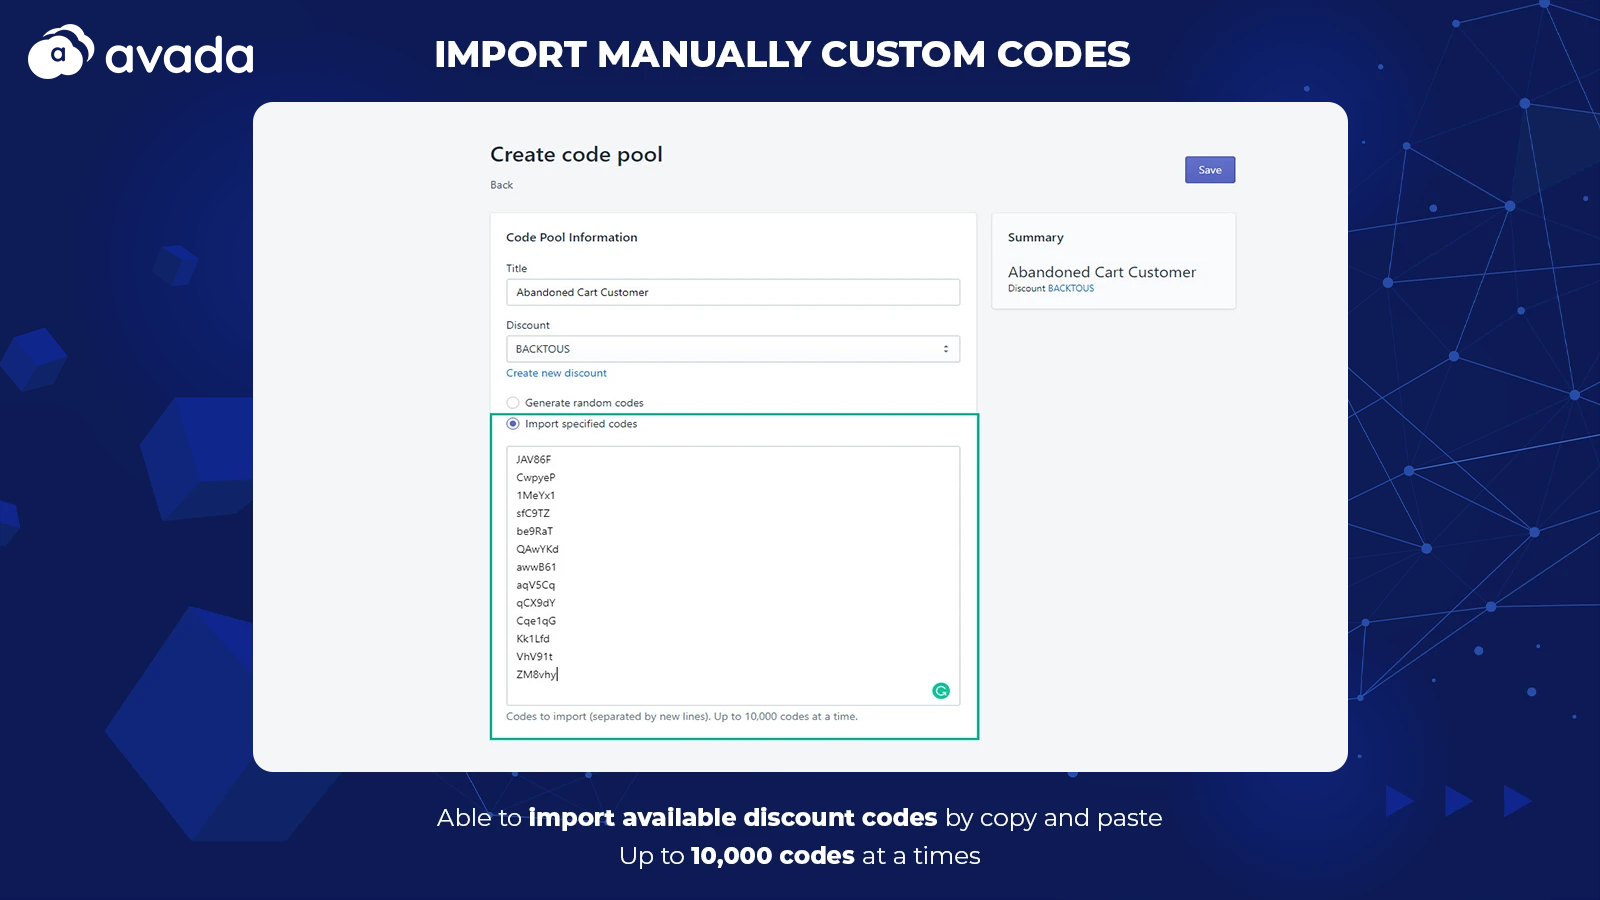 Import custom codes in bulk